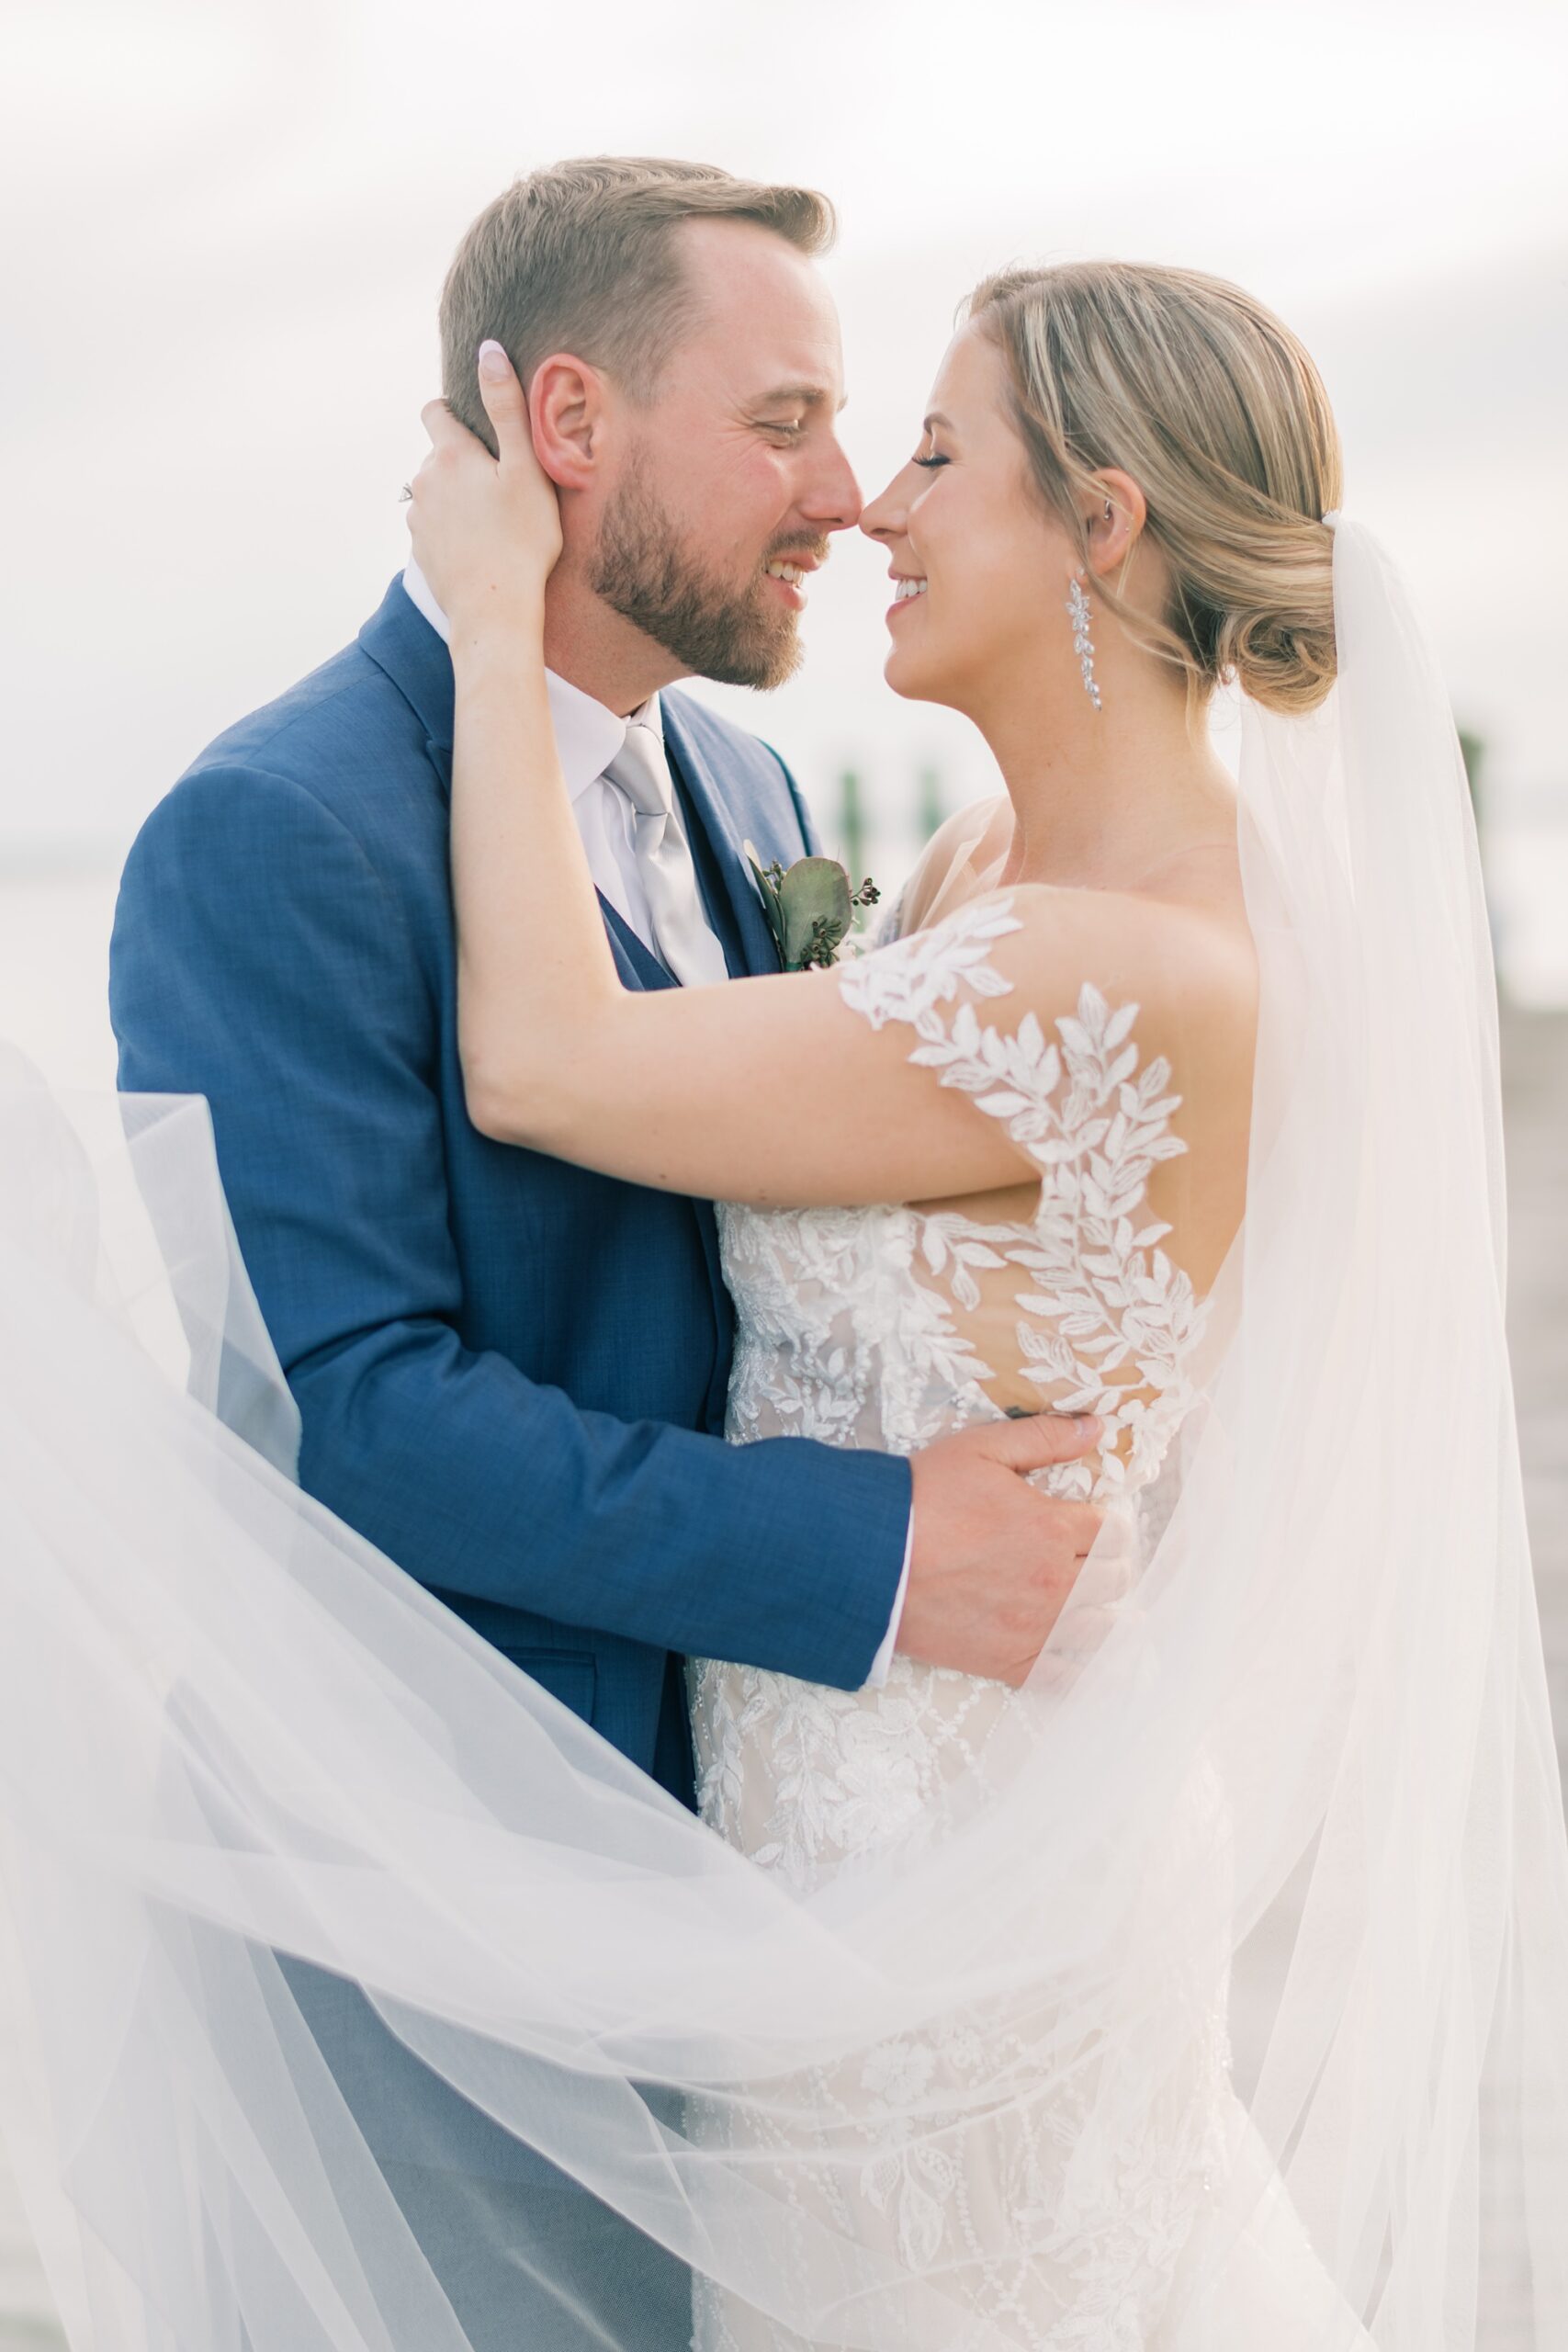 newlyweds kiss with bride's veil floating around them 